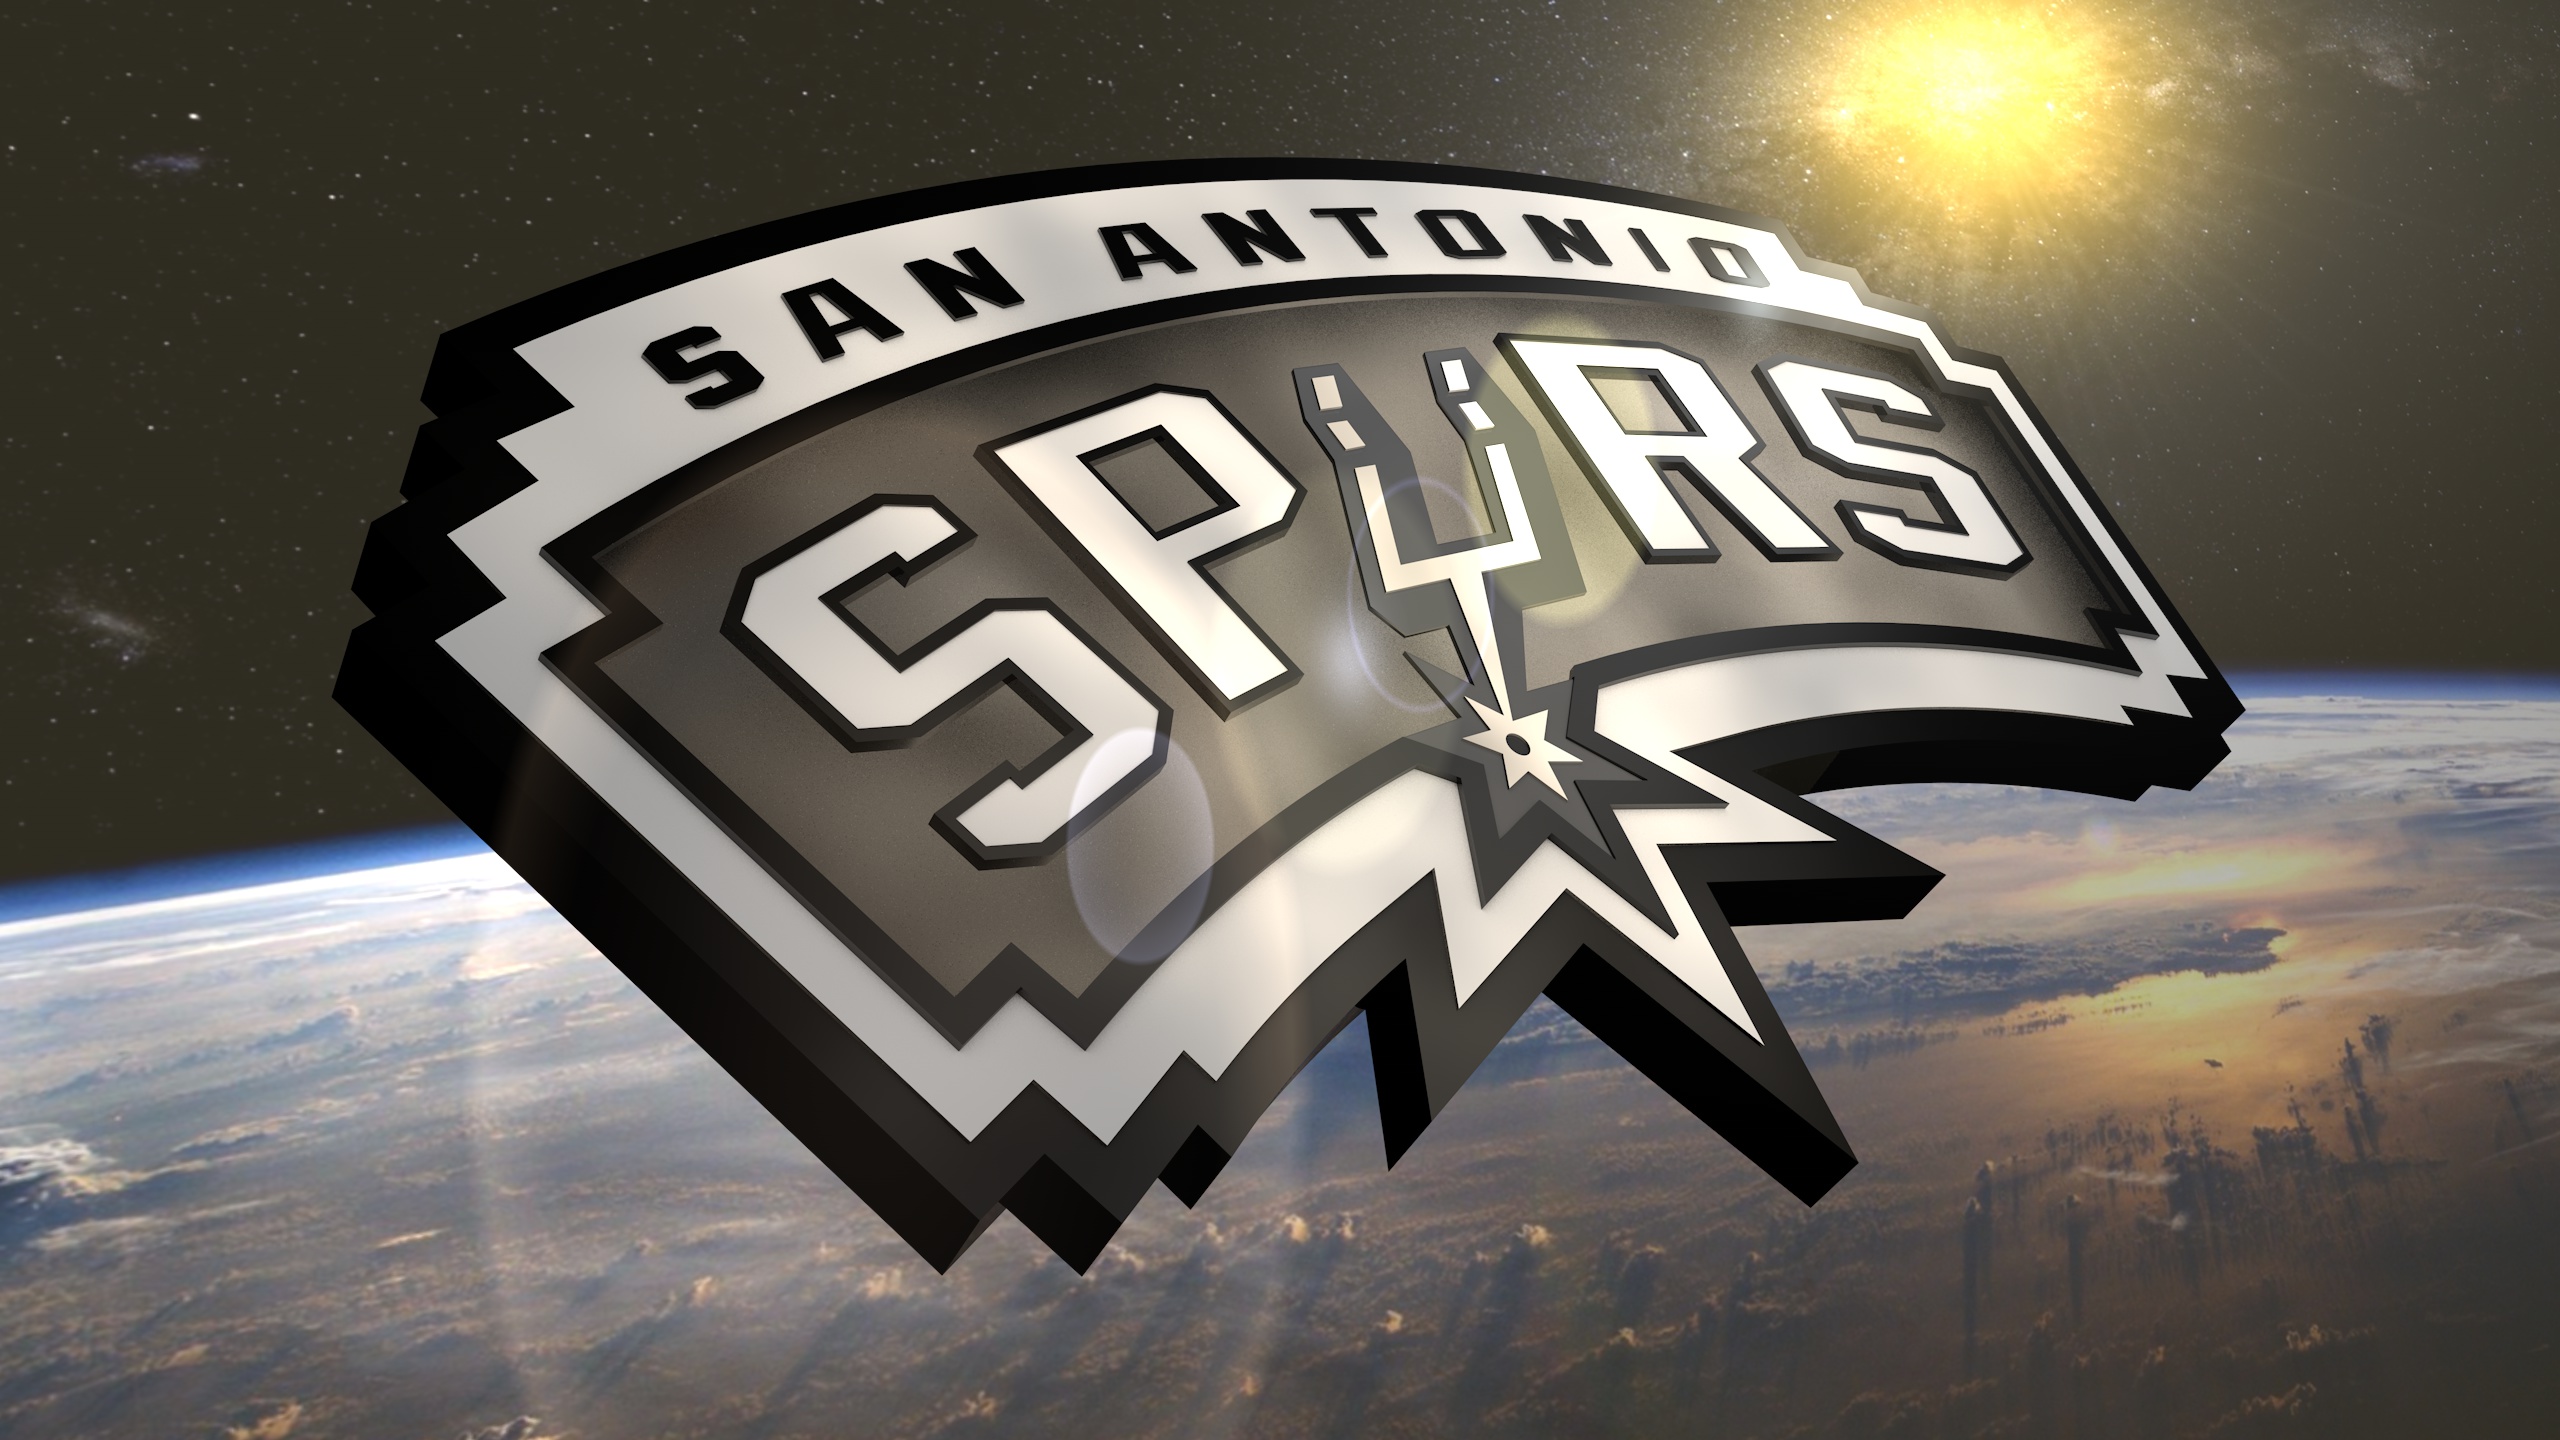 Sports San Antonio Spurs HD Wallpaper | Background Image